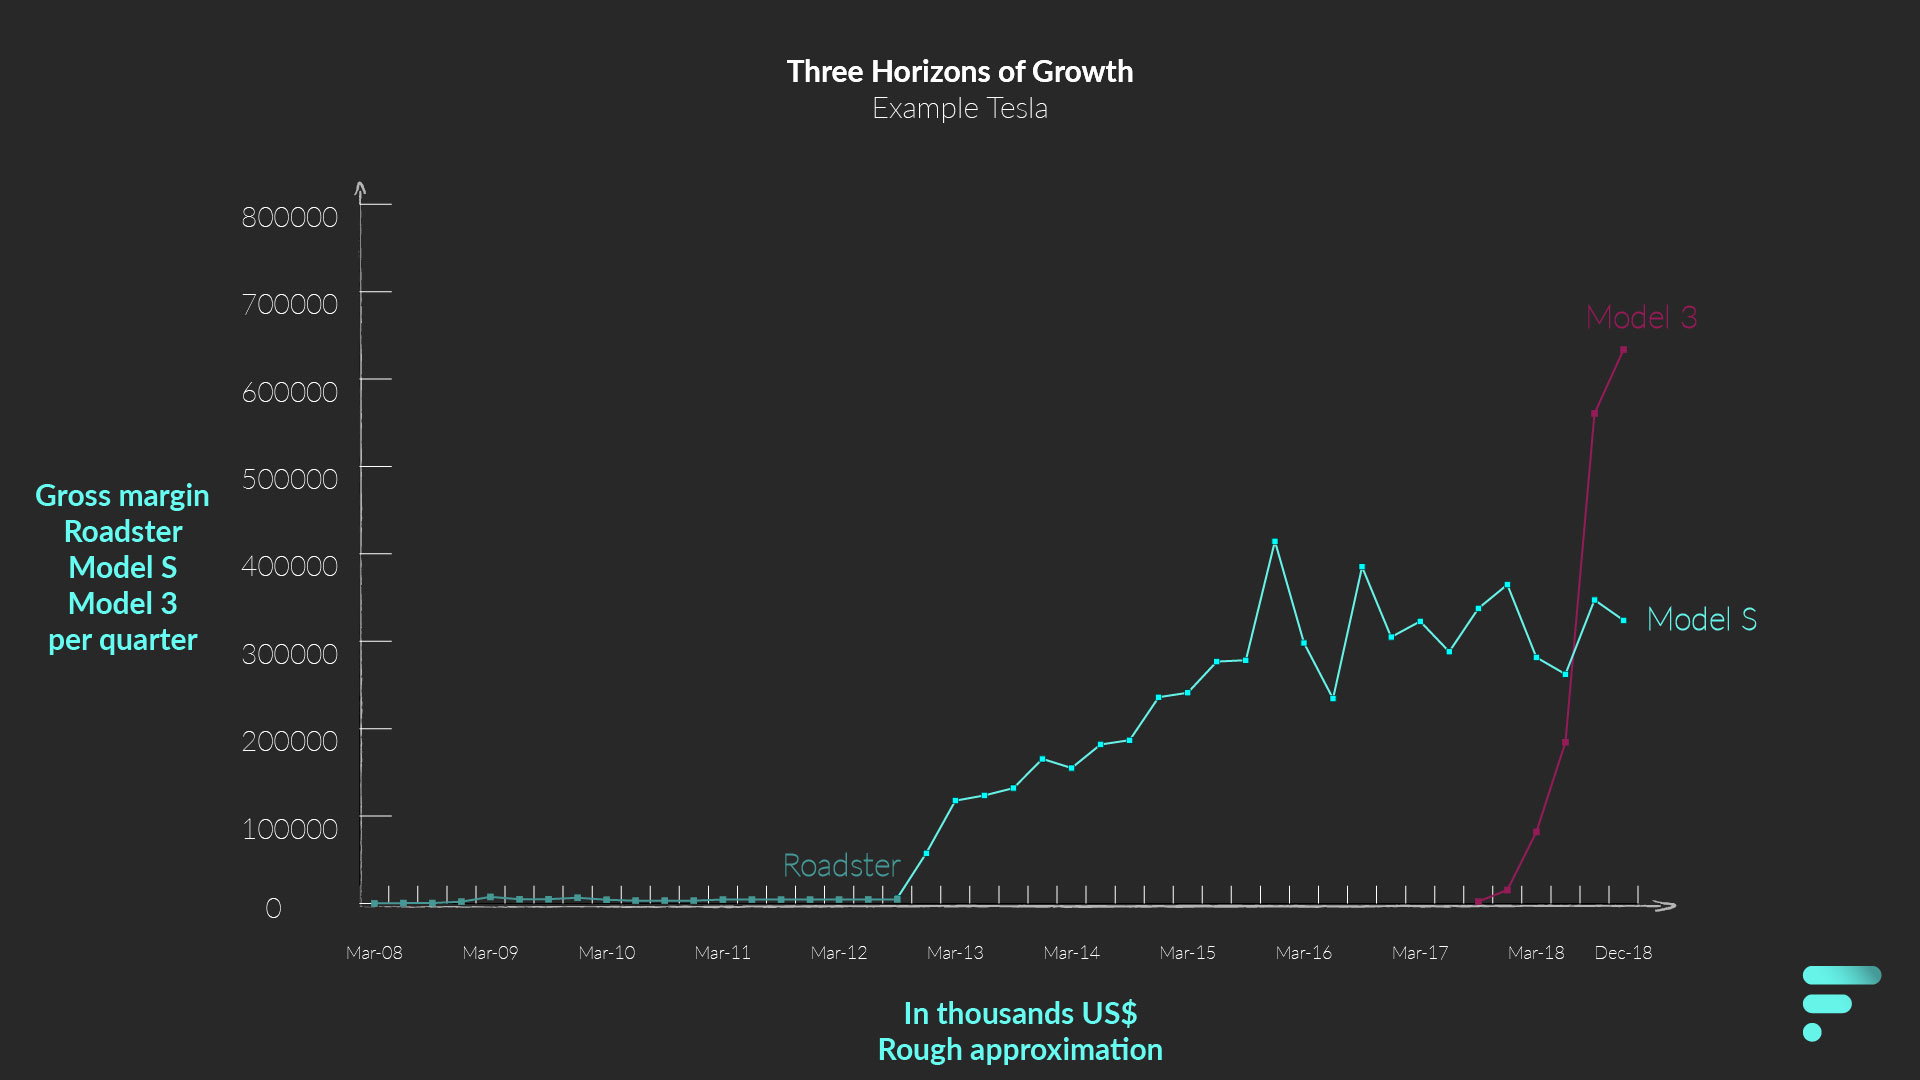 Tesla Three Horizons of Growth - with Data